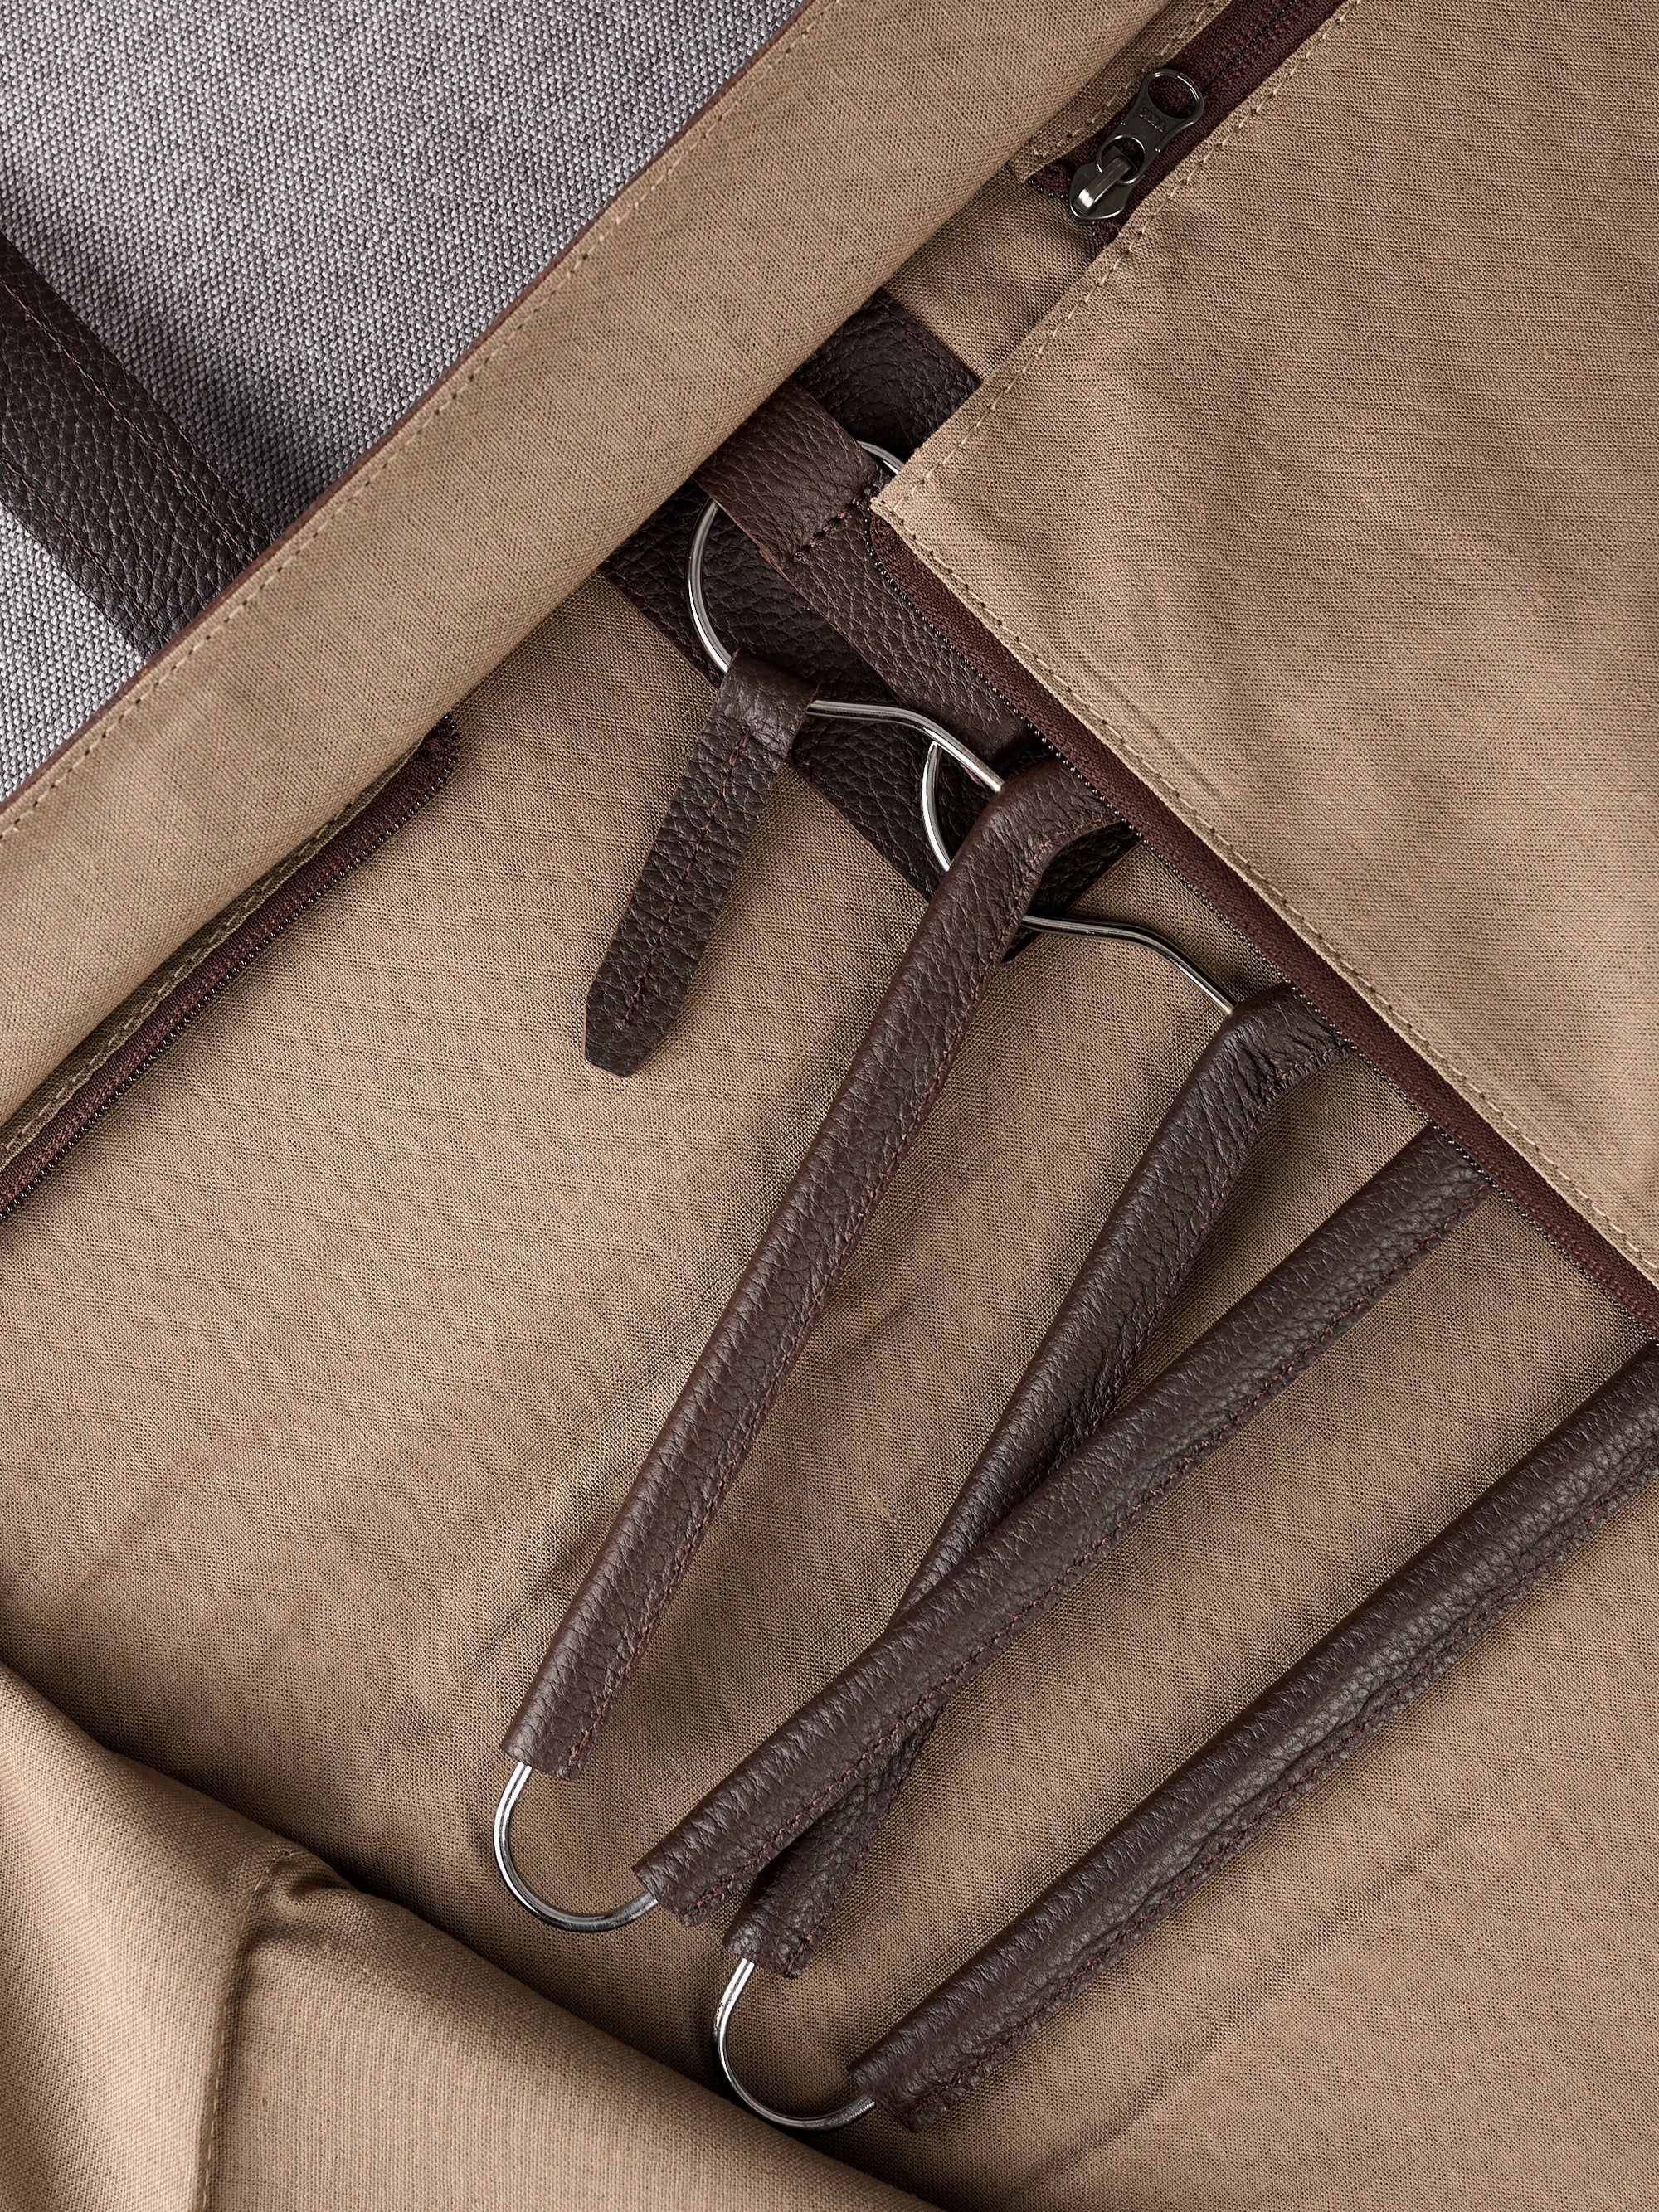 Leather Hangers. Travel Suit Bag Dark Brown by Capra